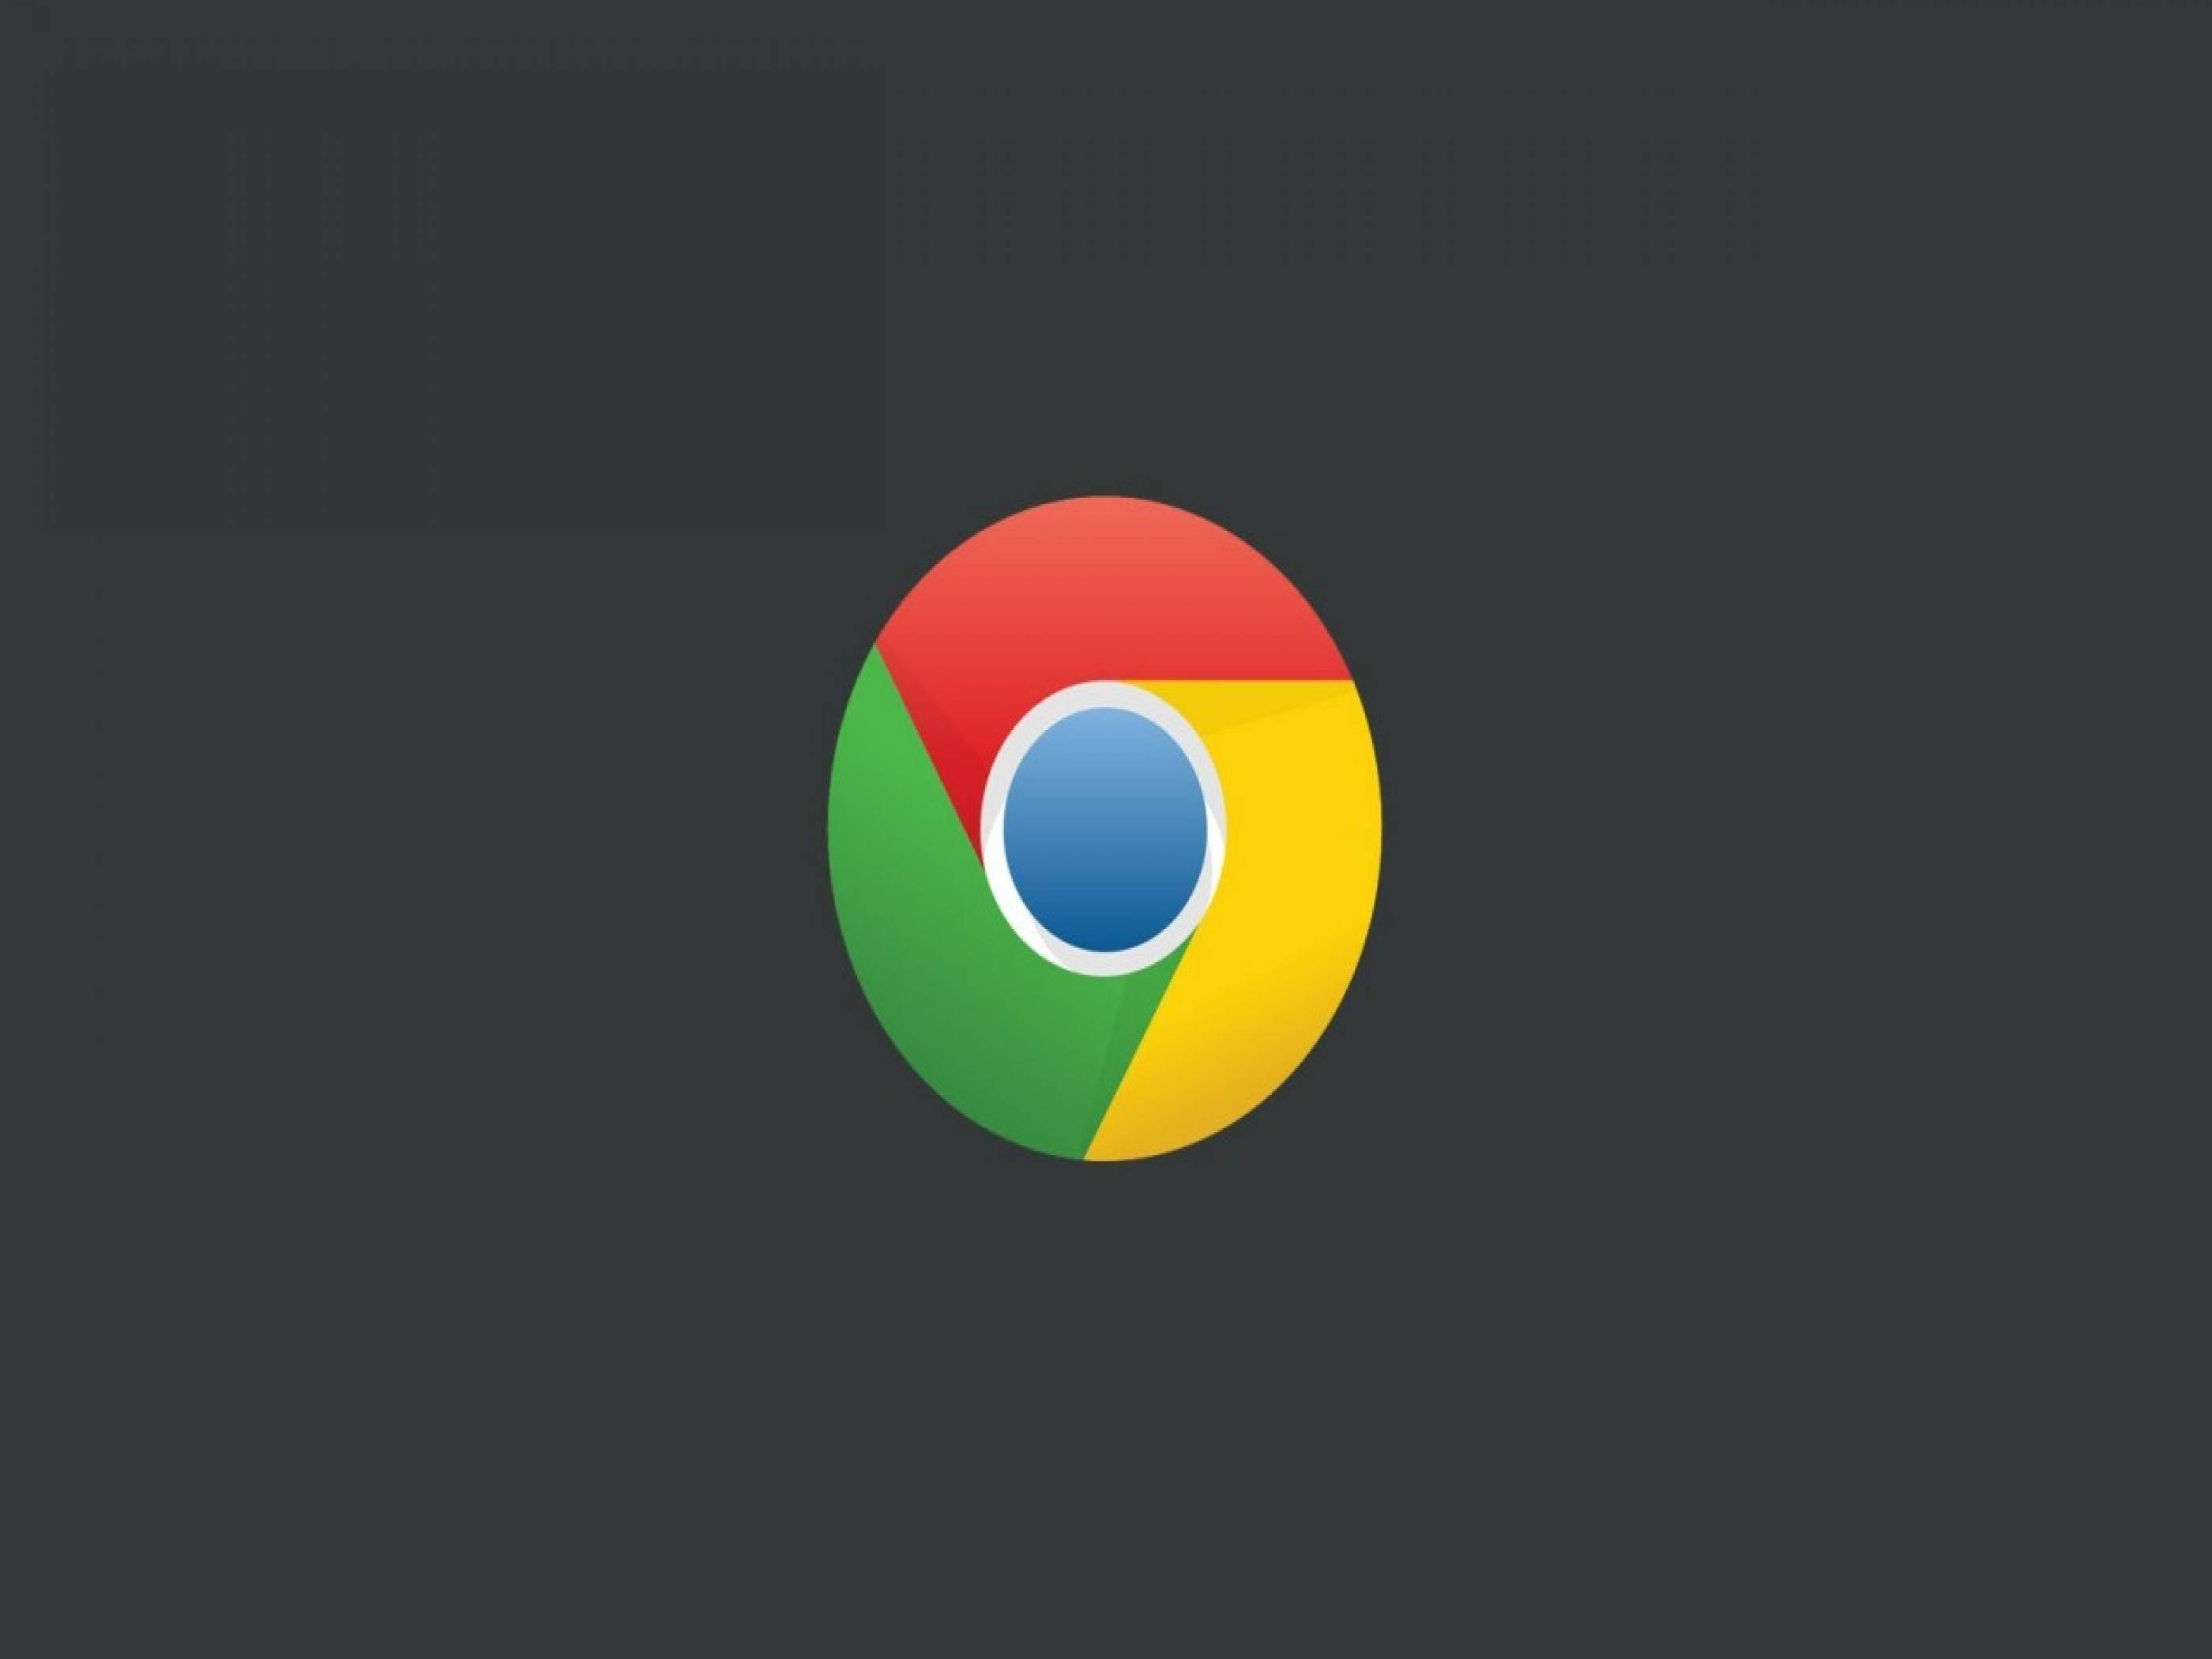 The Google Chrome Icon Background